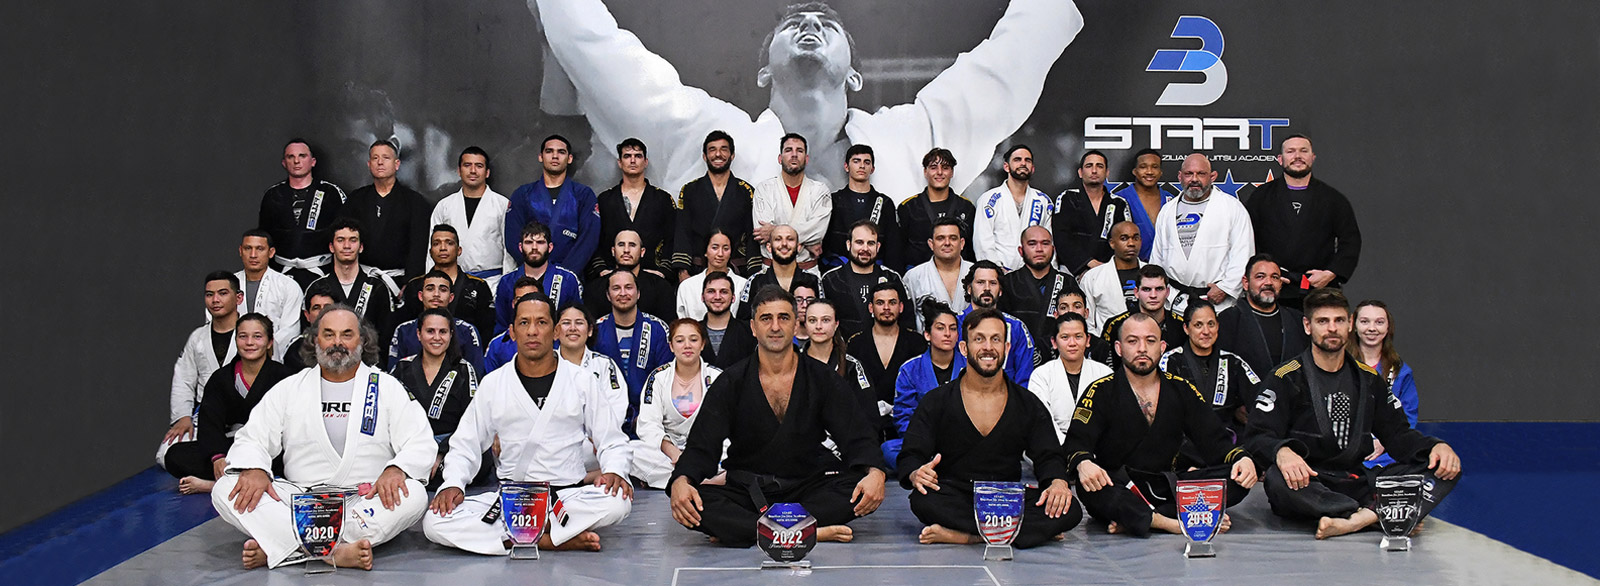 START Jiu-Jitsu – Brazilian Jiu-Jitsu Academy in Pembroke Pines, Florida